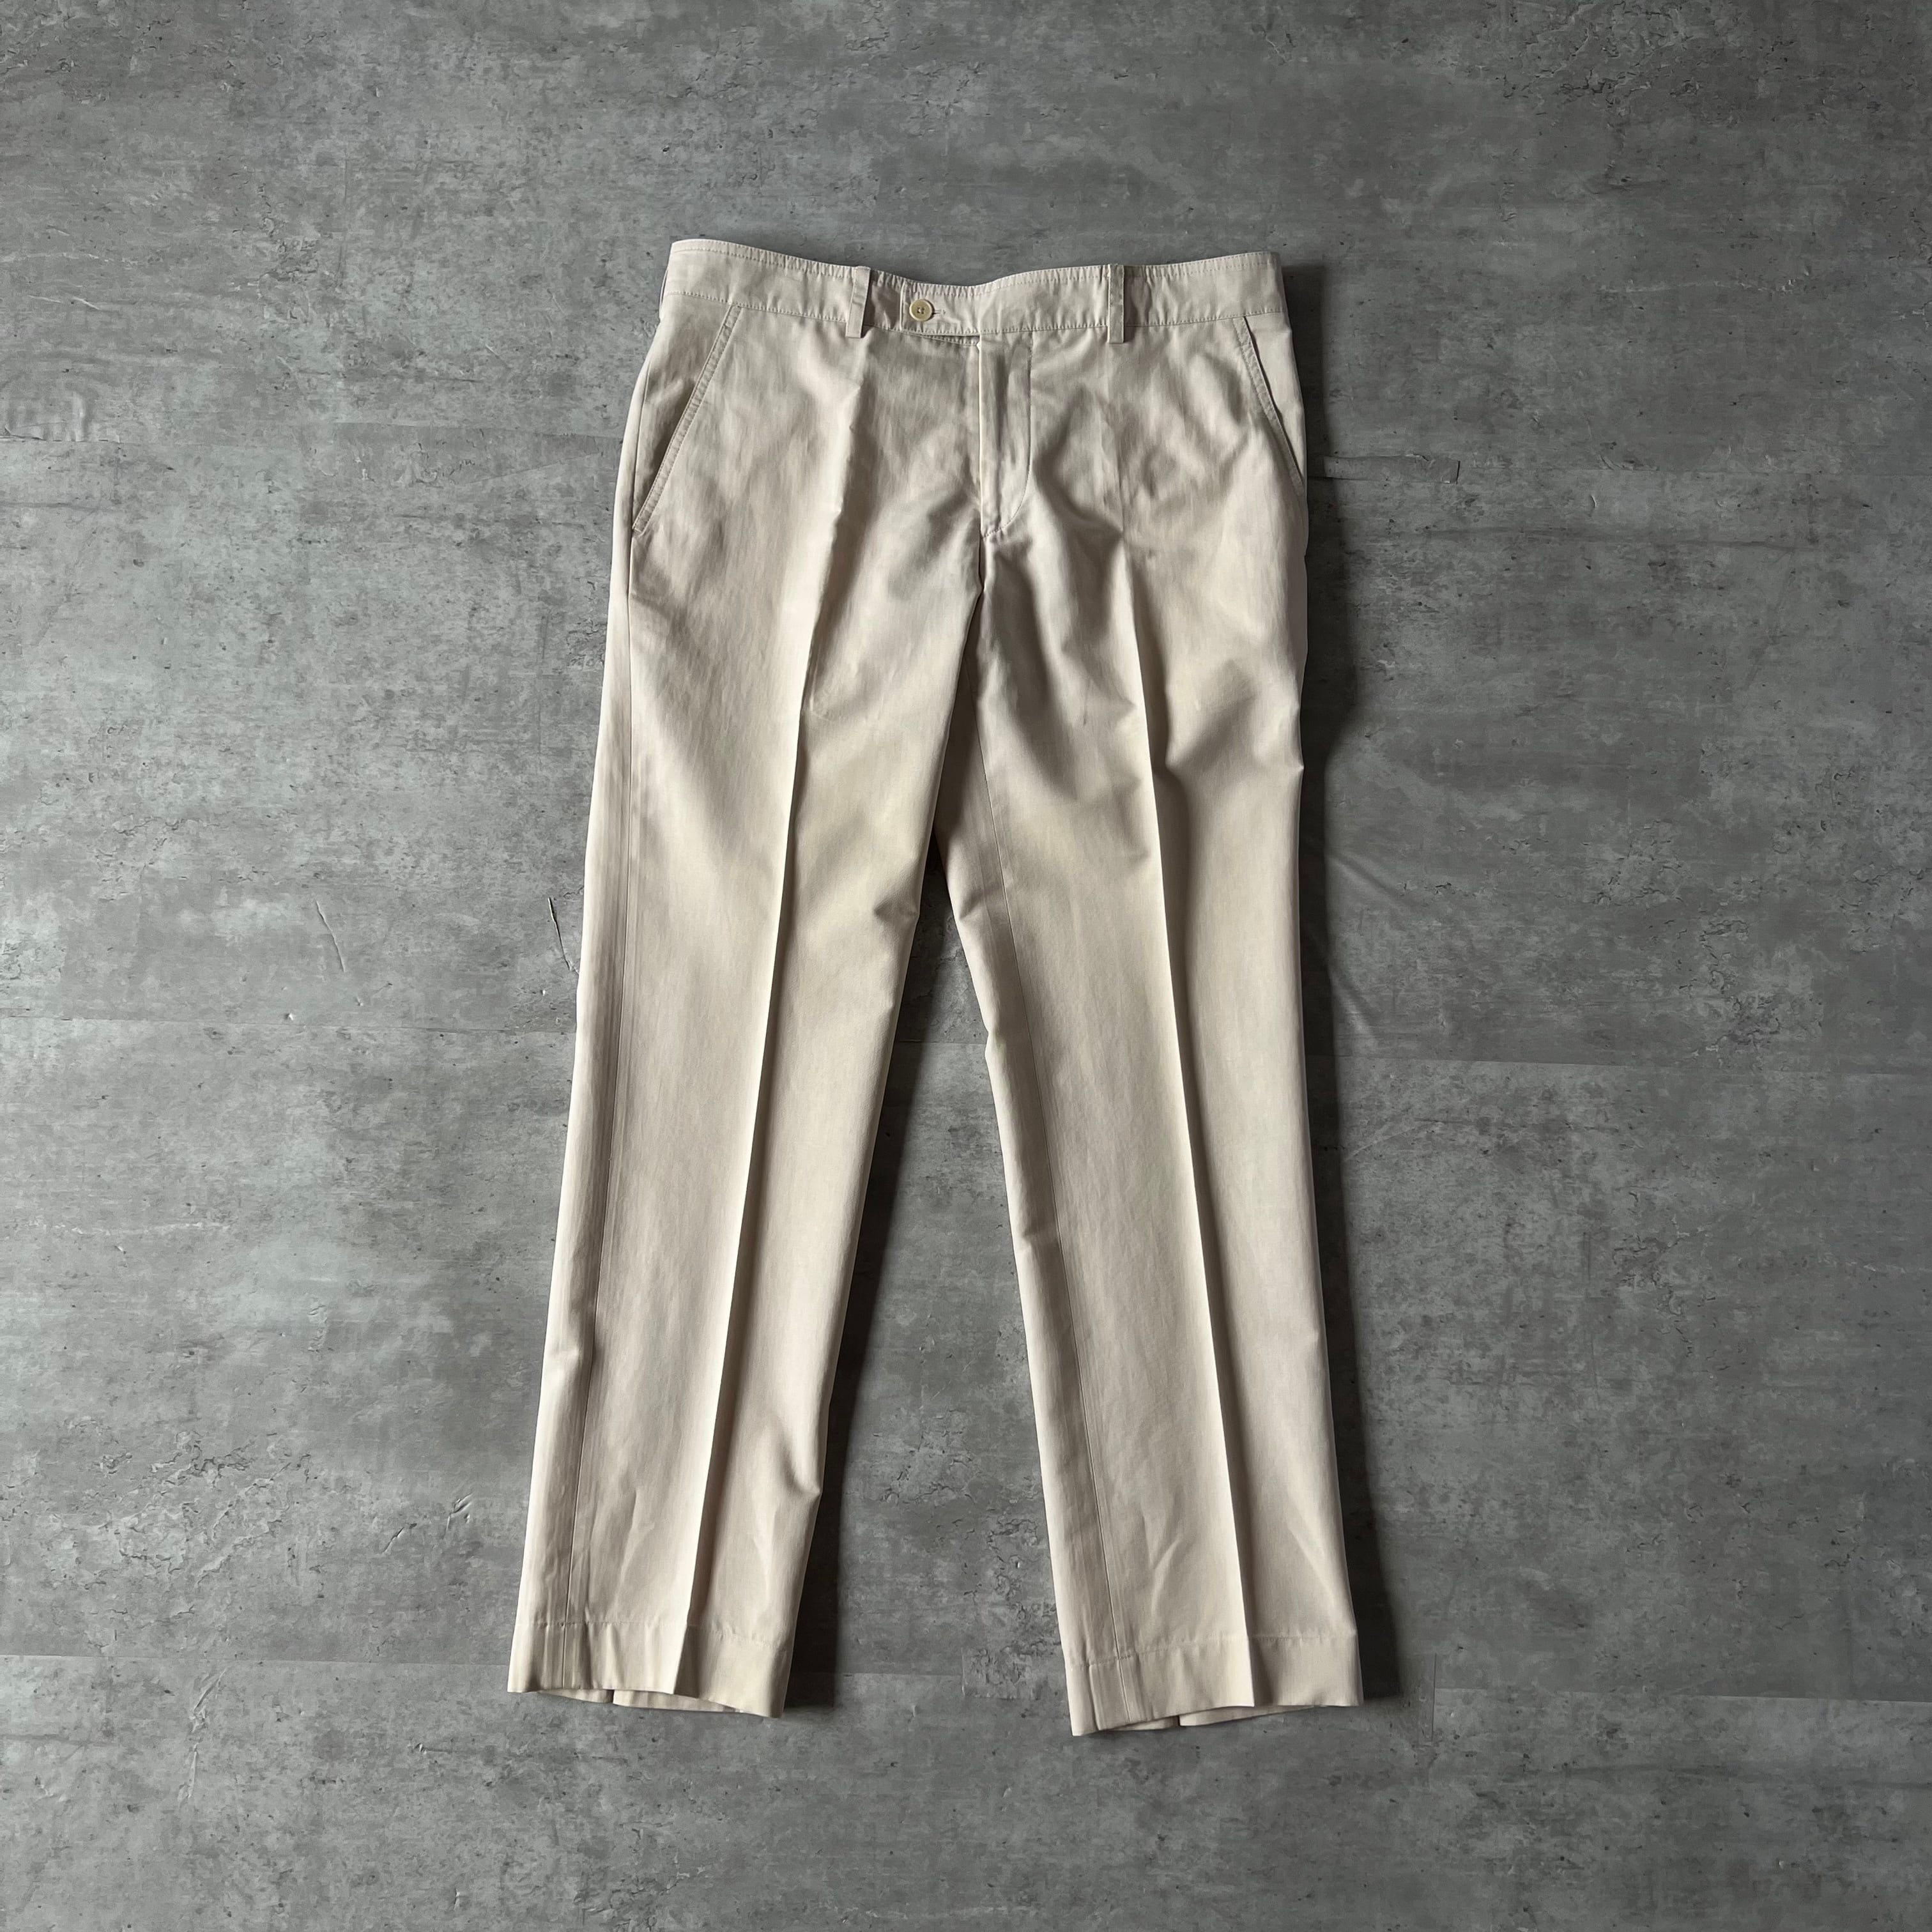 80s “Hermes” W34相当 cotton linen slacks pants made in italy ...